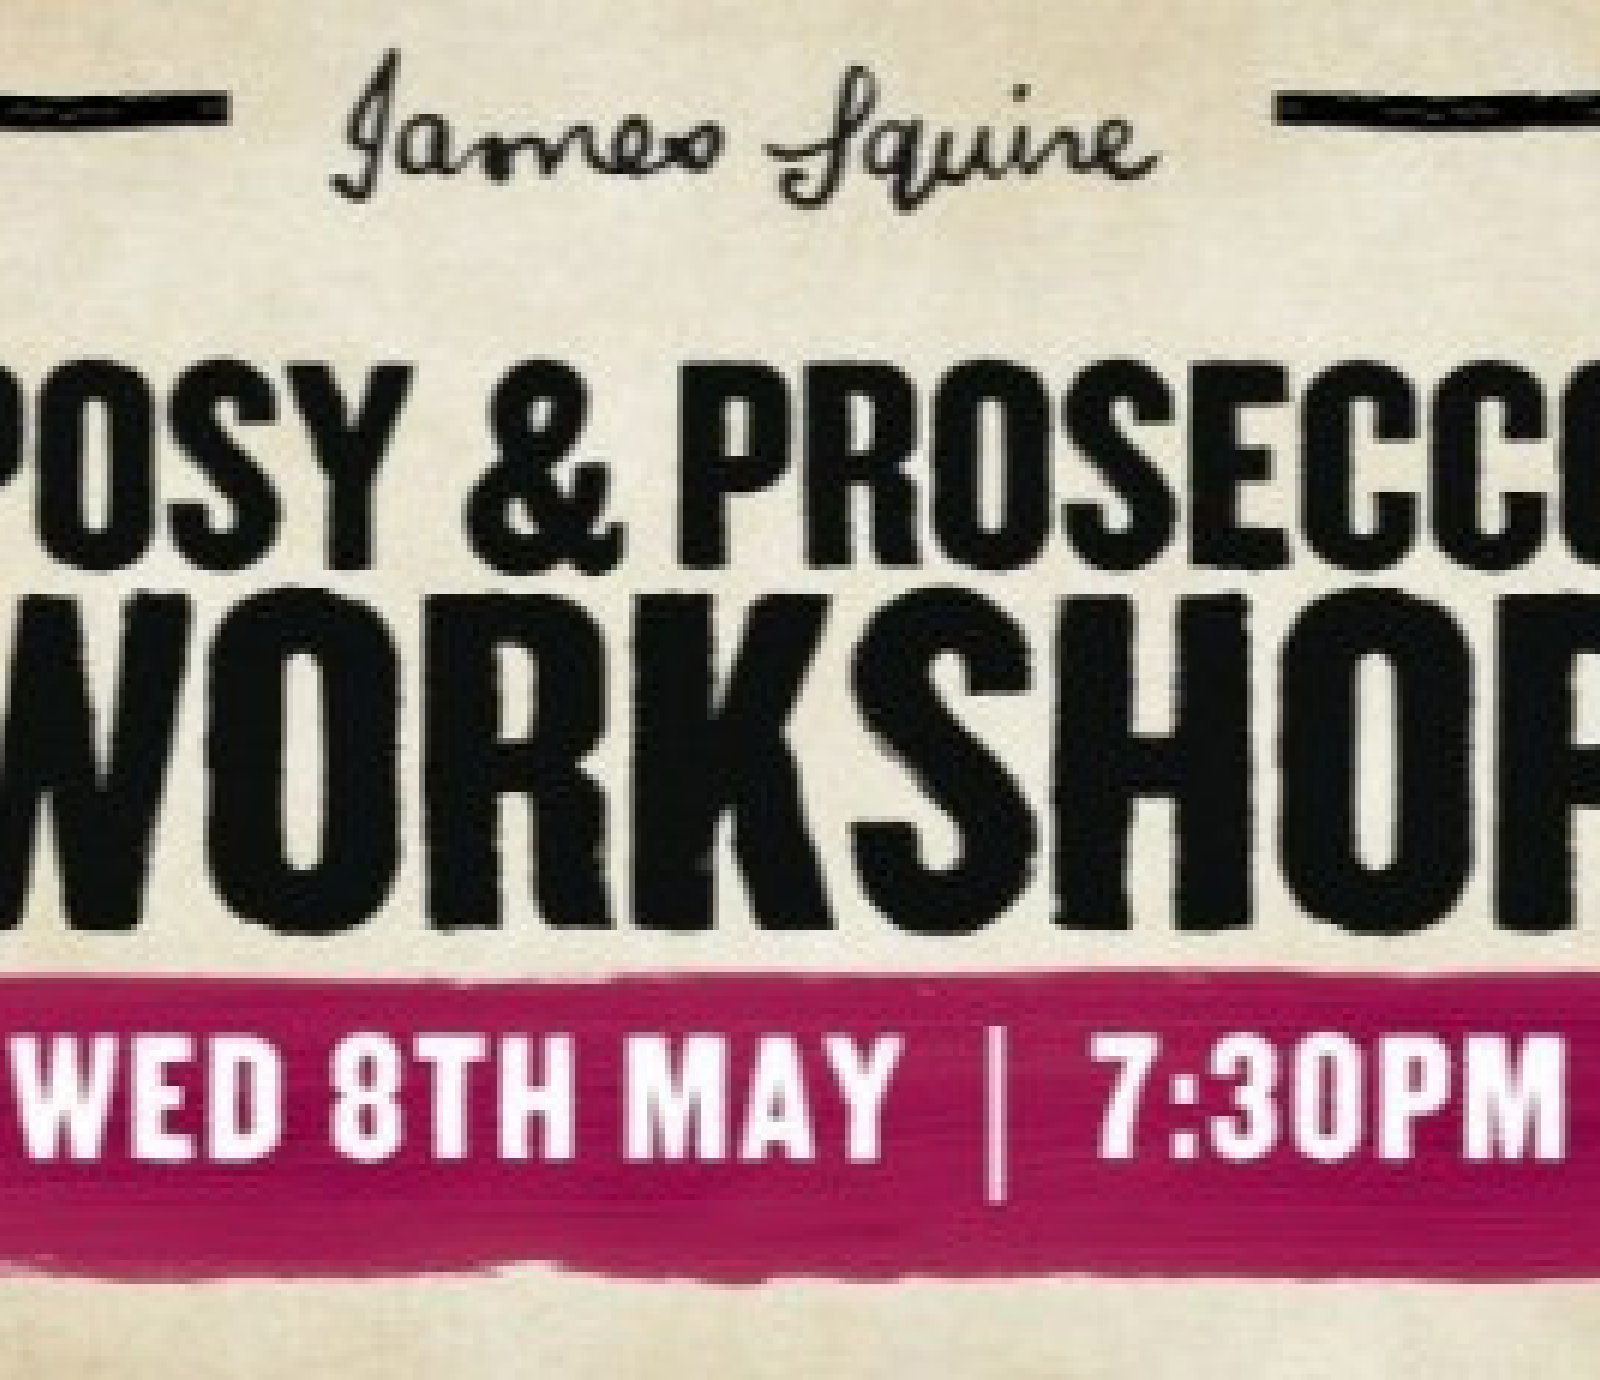 Posie & Prosecco Workshop